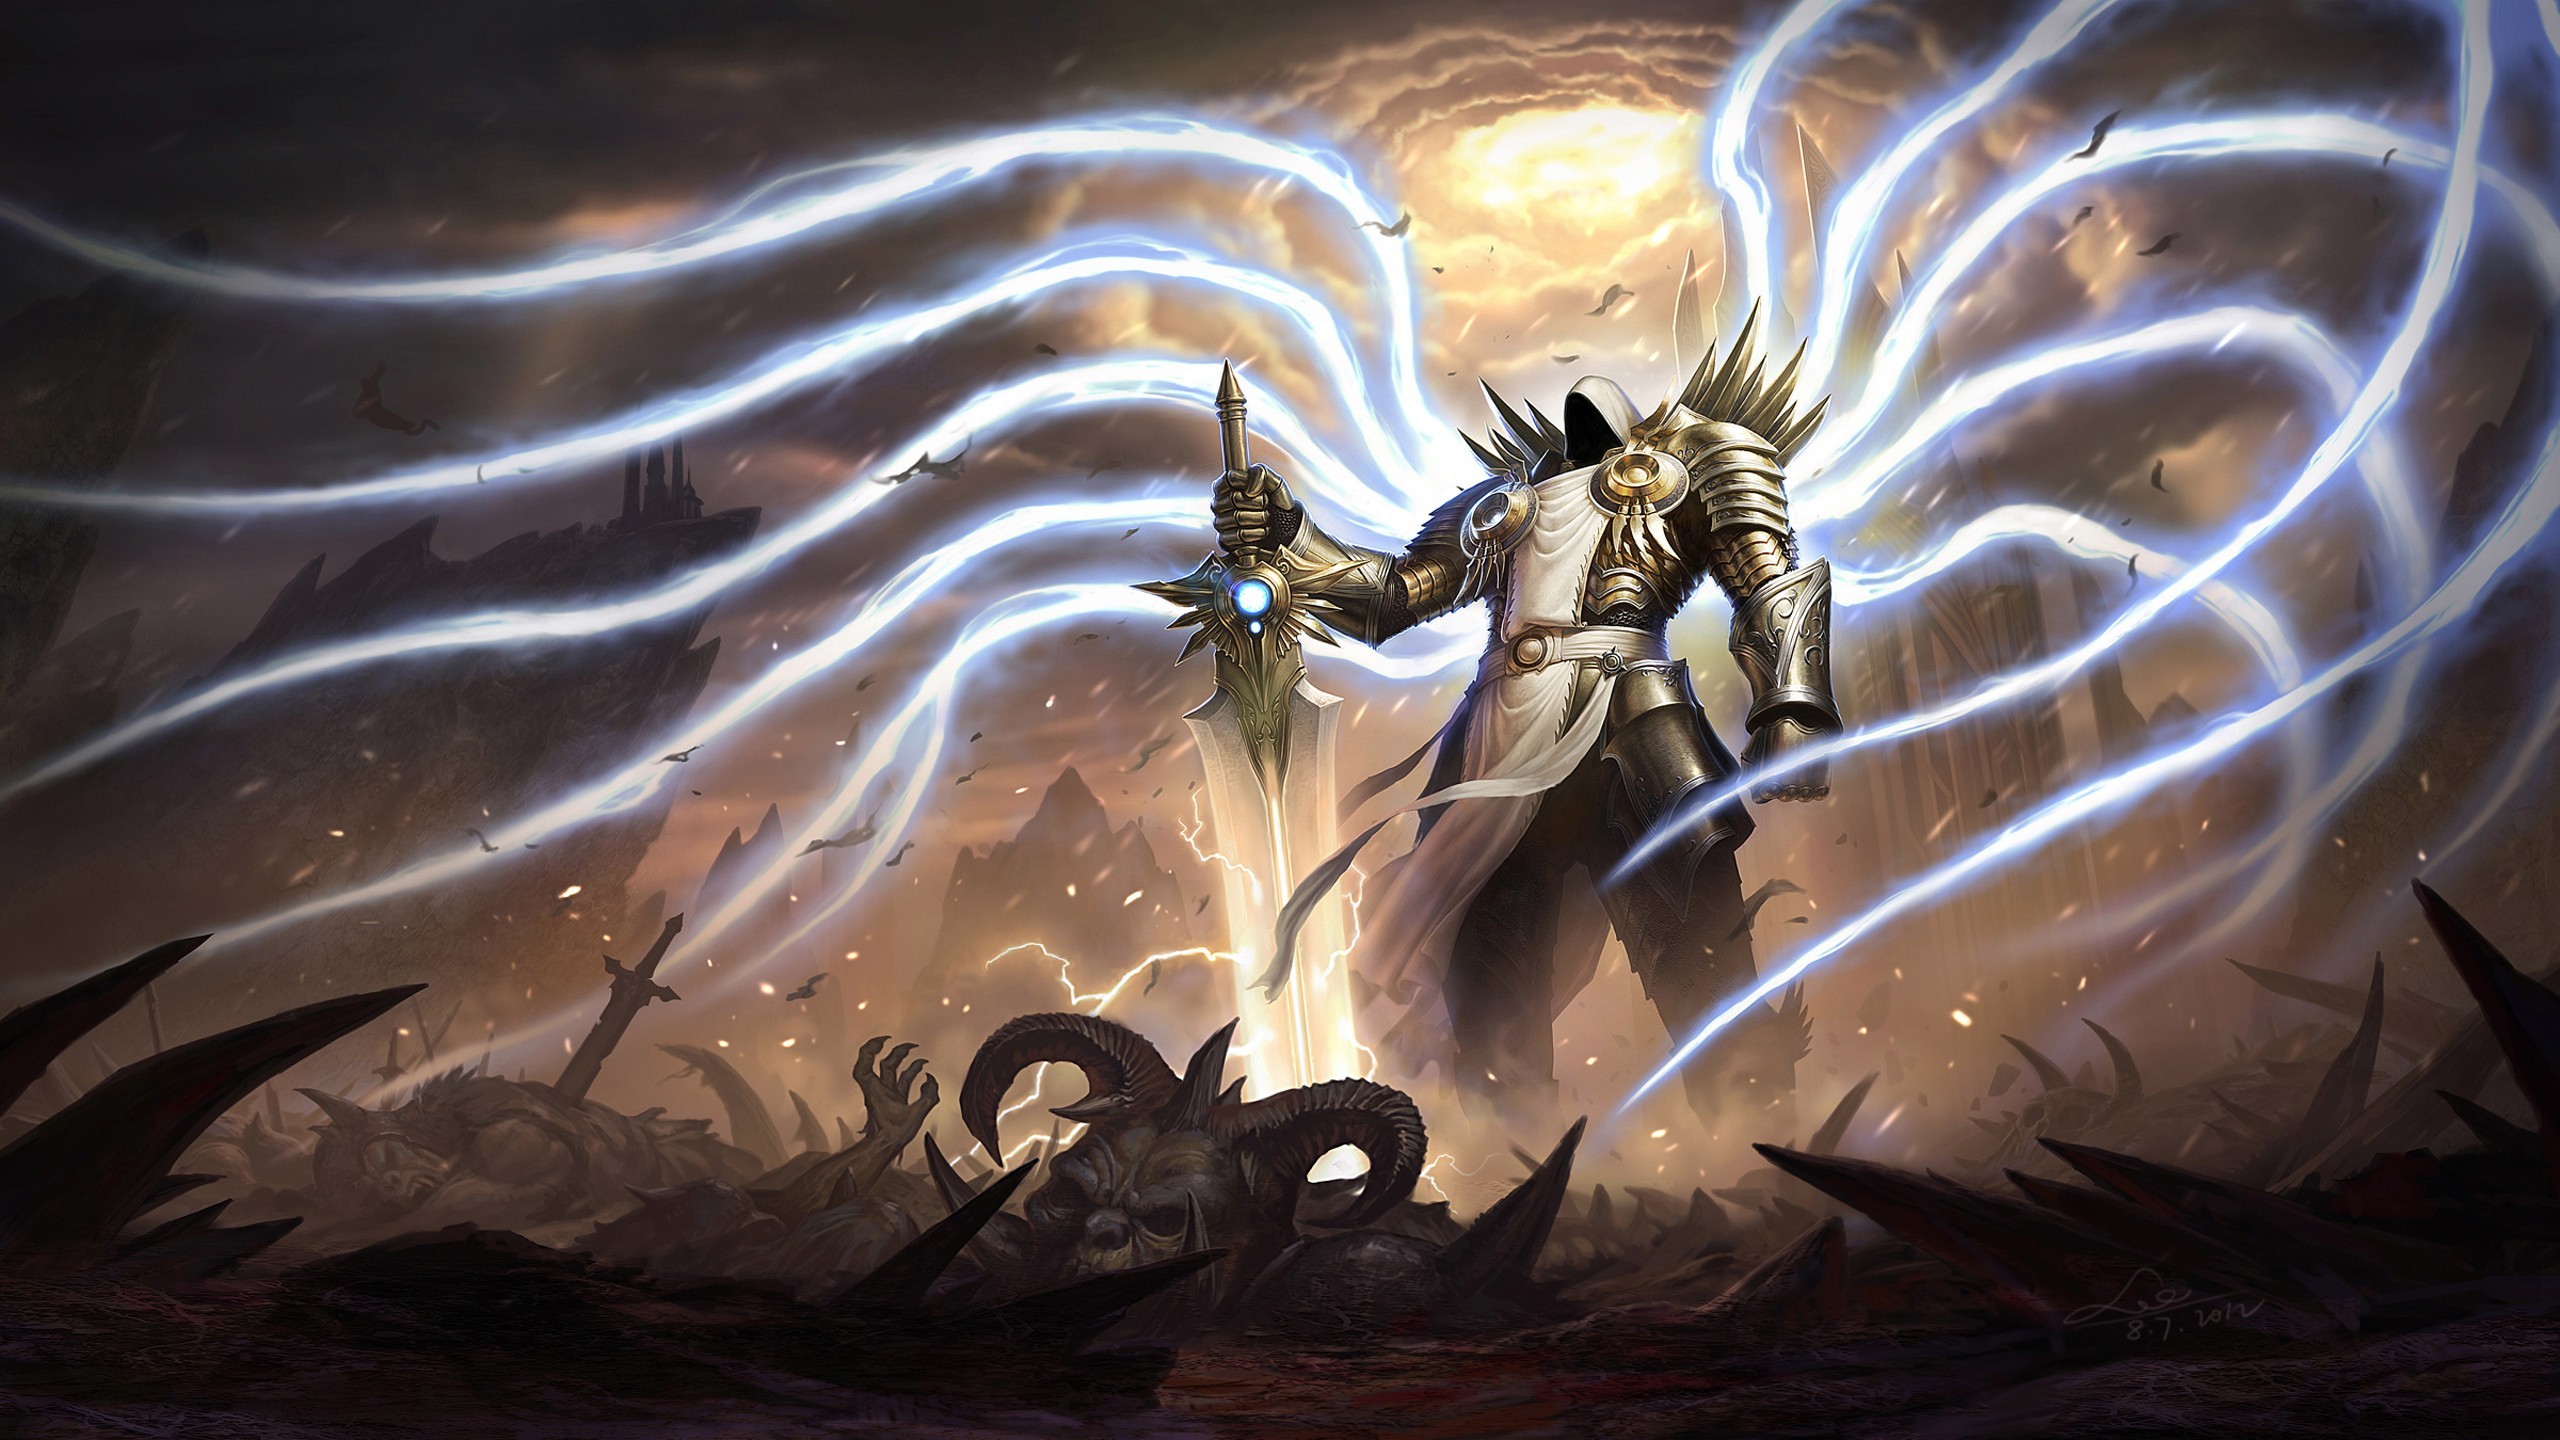 General 2560x1440 Diablo 3: Reaper of Souls video games Diablo III fantasy art digital art Tyrael PC gaming Blizzard Entertainment